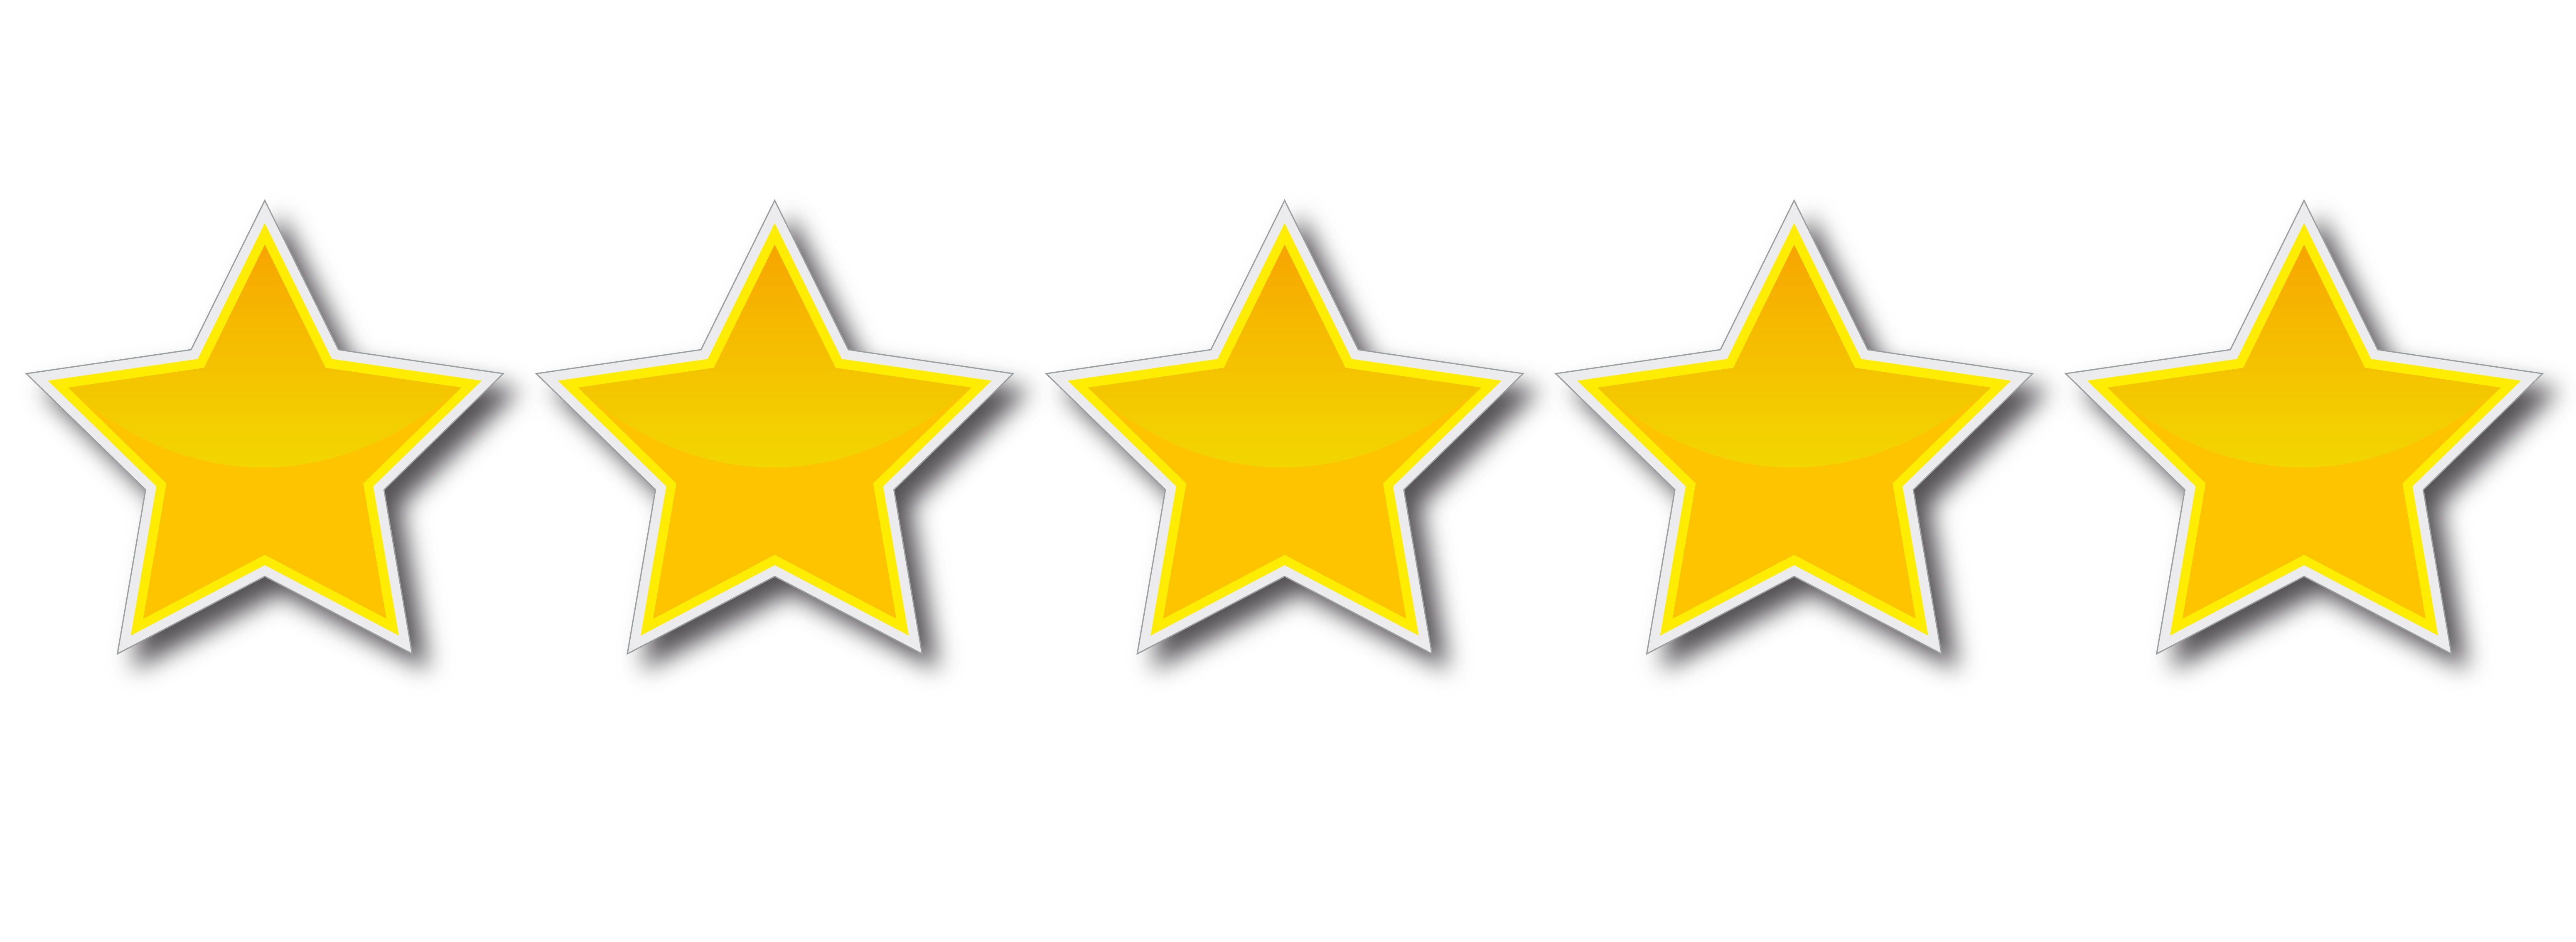 5 STAR Reviews for Write-Brain on Amazon.com | Bonnie Neubauer ...